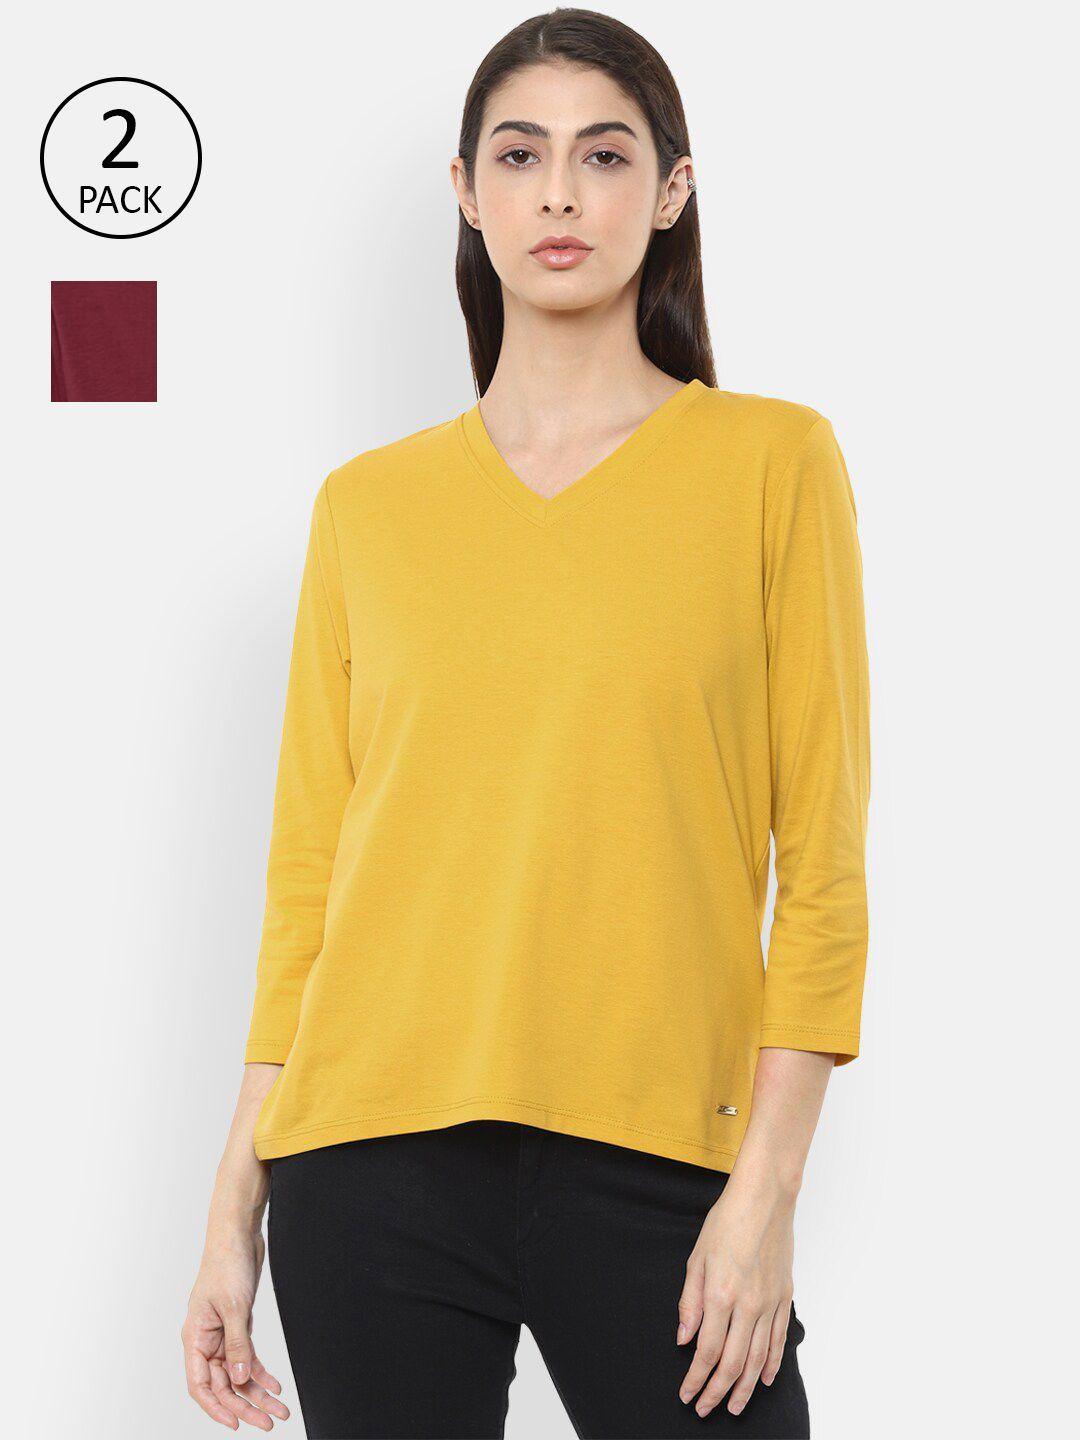 van heusen woman women pack of 2 yellow & maroon v-neck t-shirts